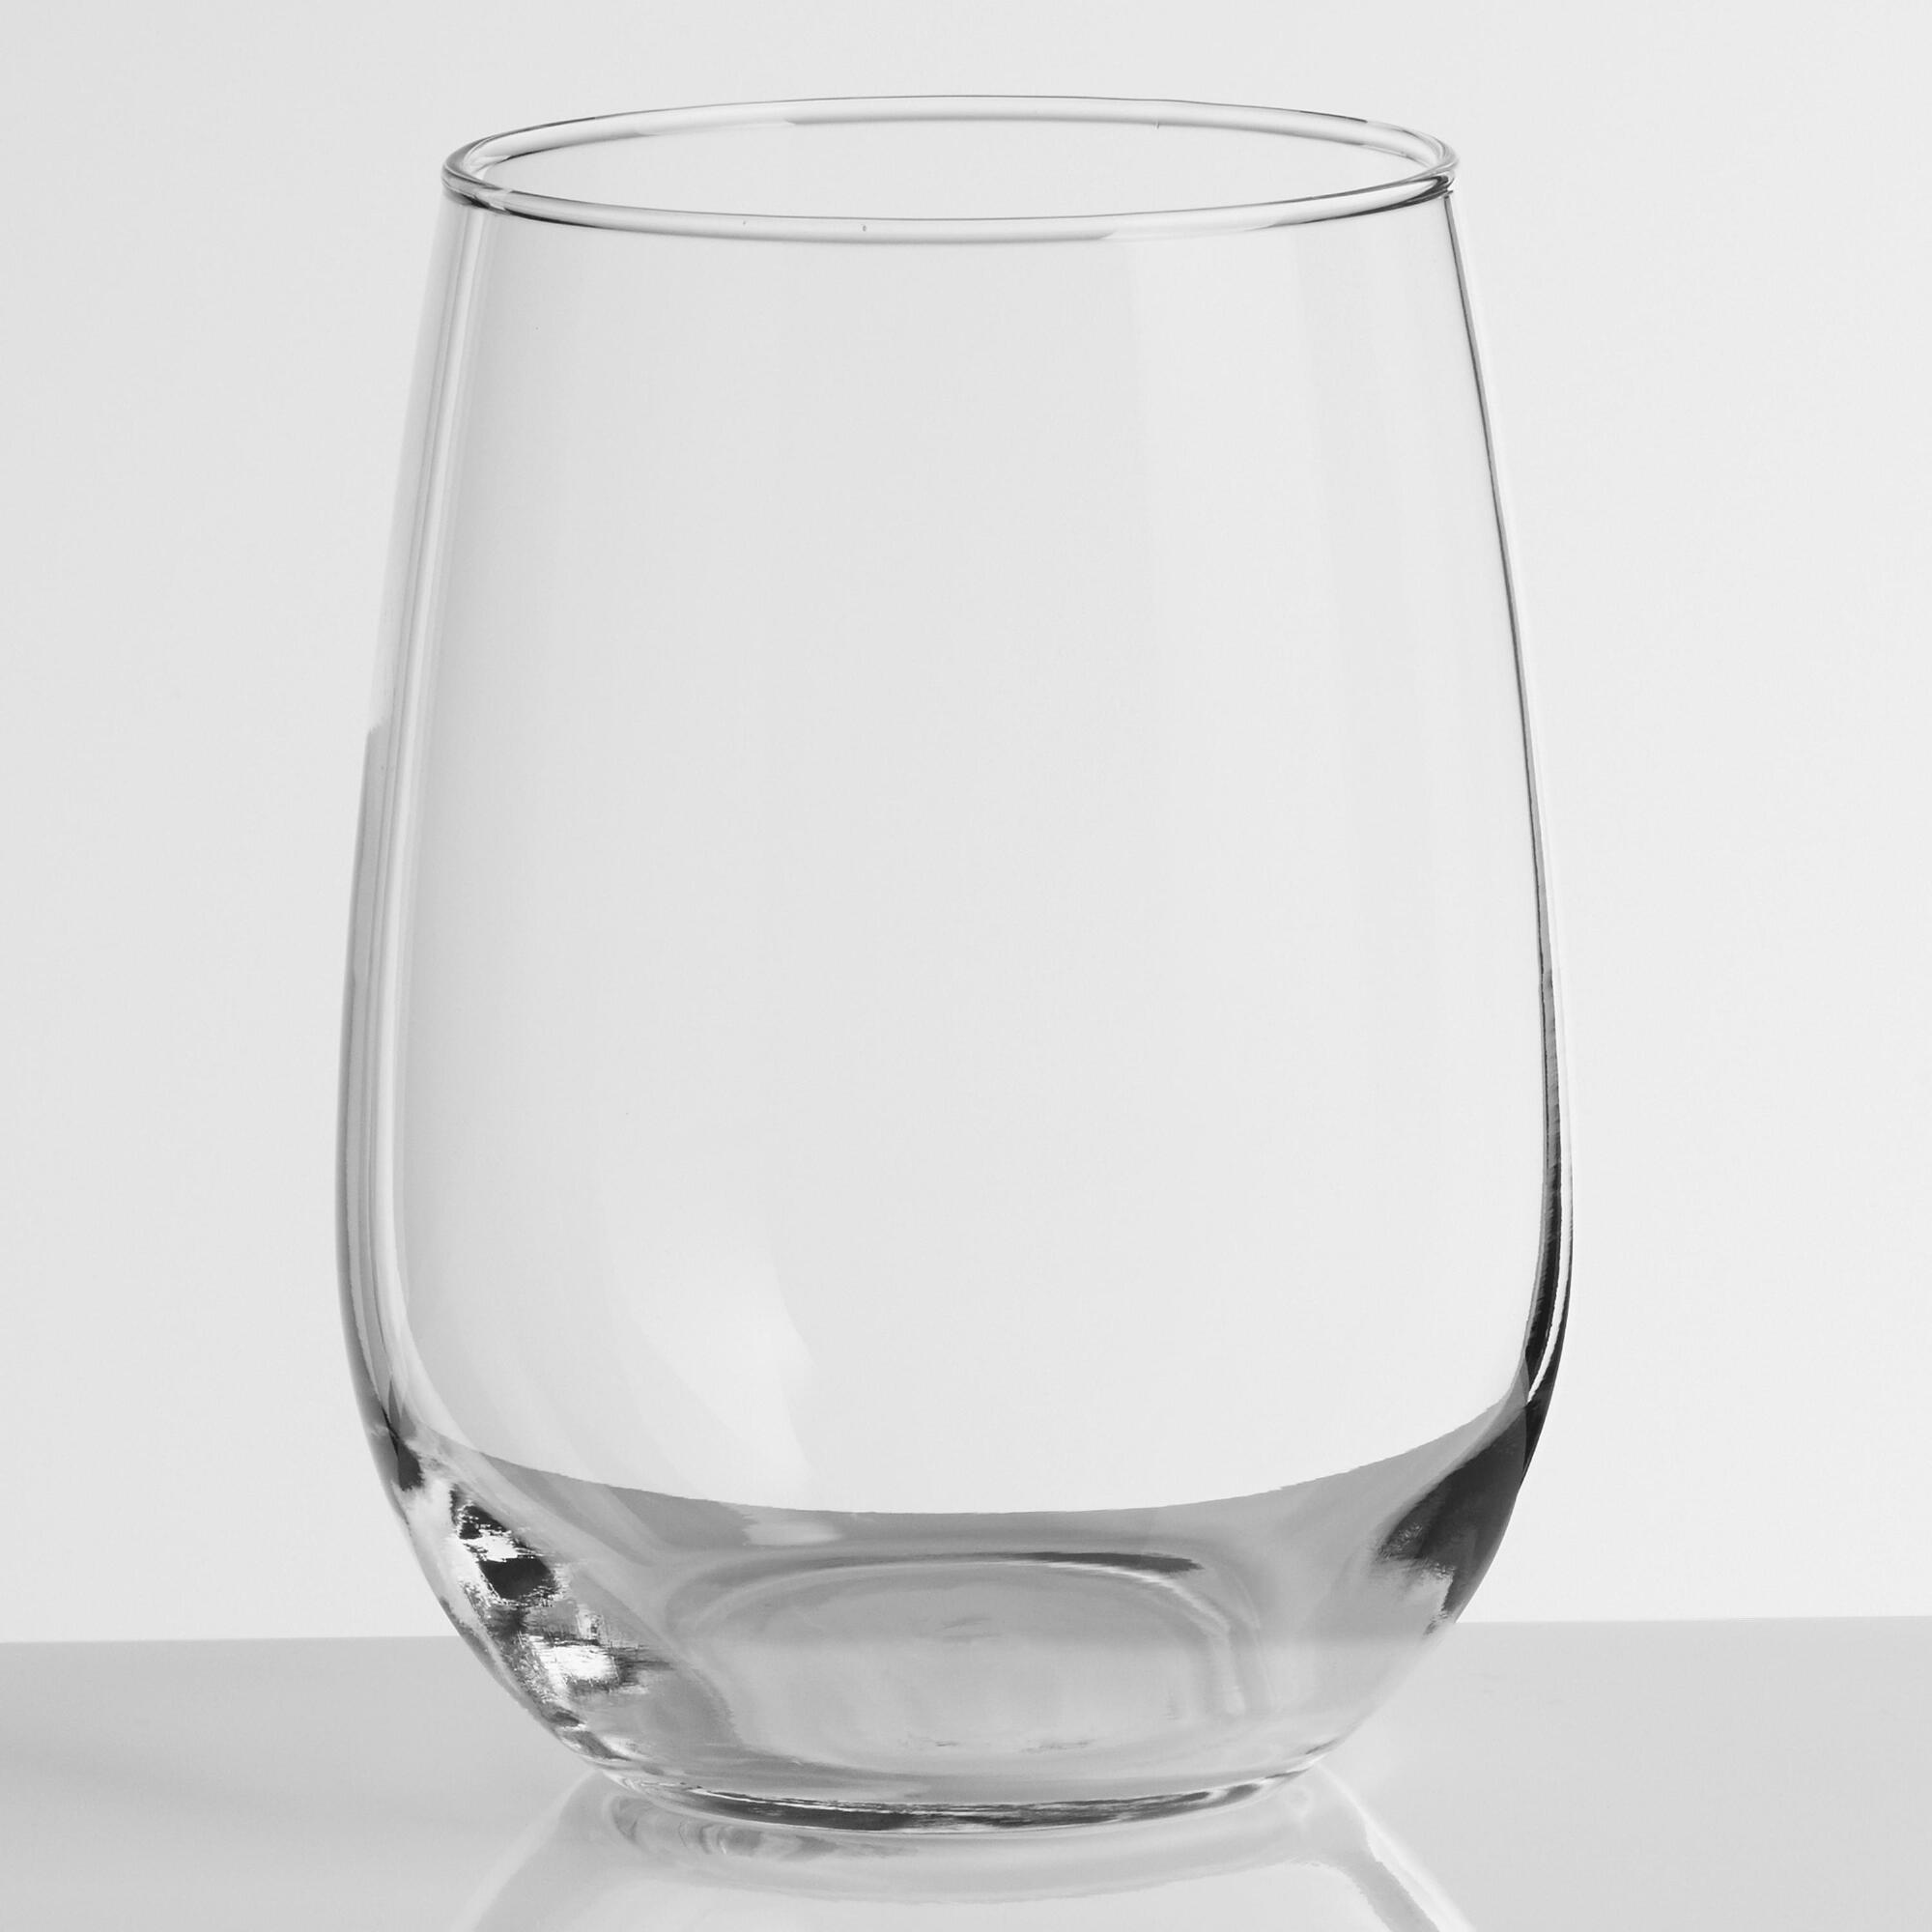 Stemless White Wine Glasses Set of 4 by World Market